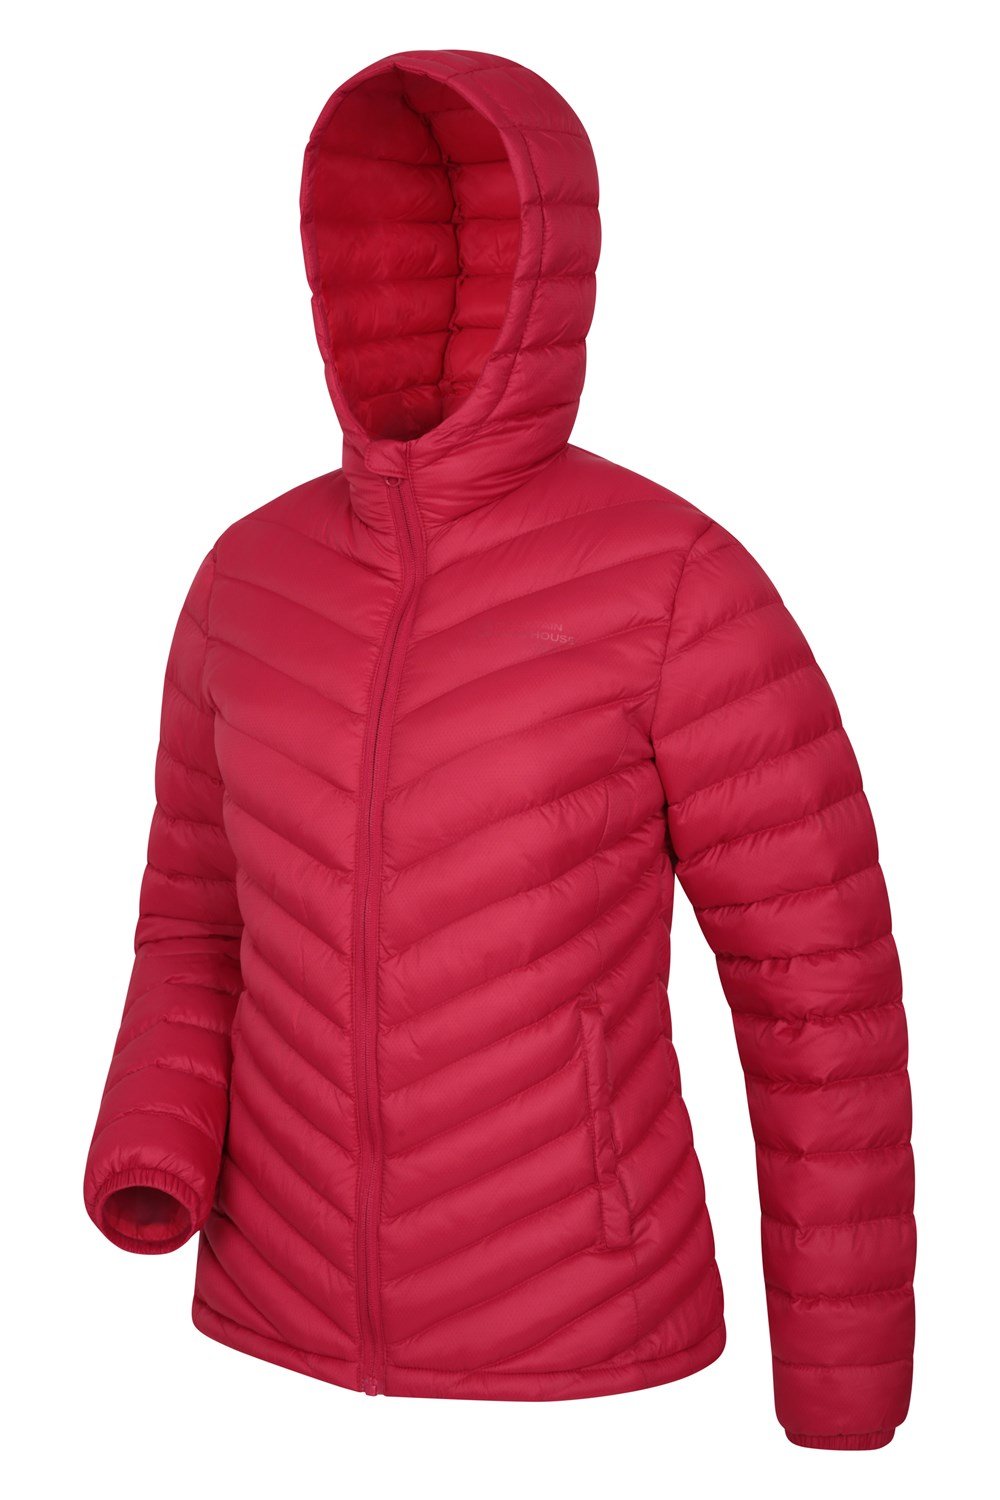 Mountain Warehouse Womens Seasons Padded Puffer Jacket Winter Warm ...